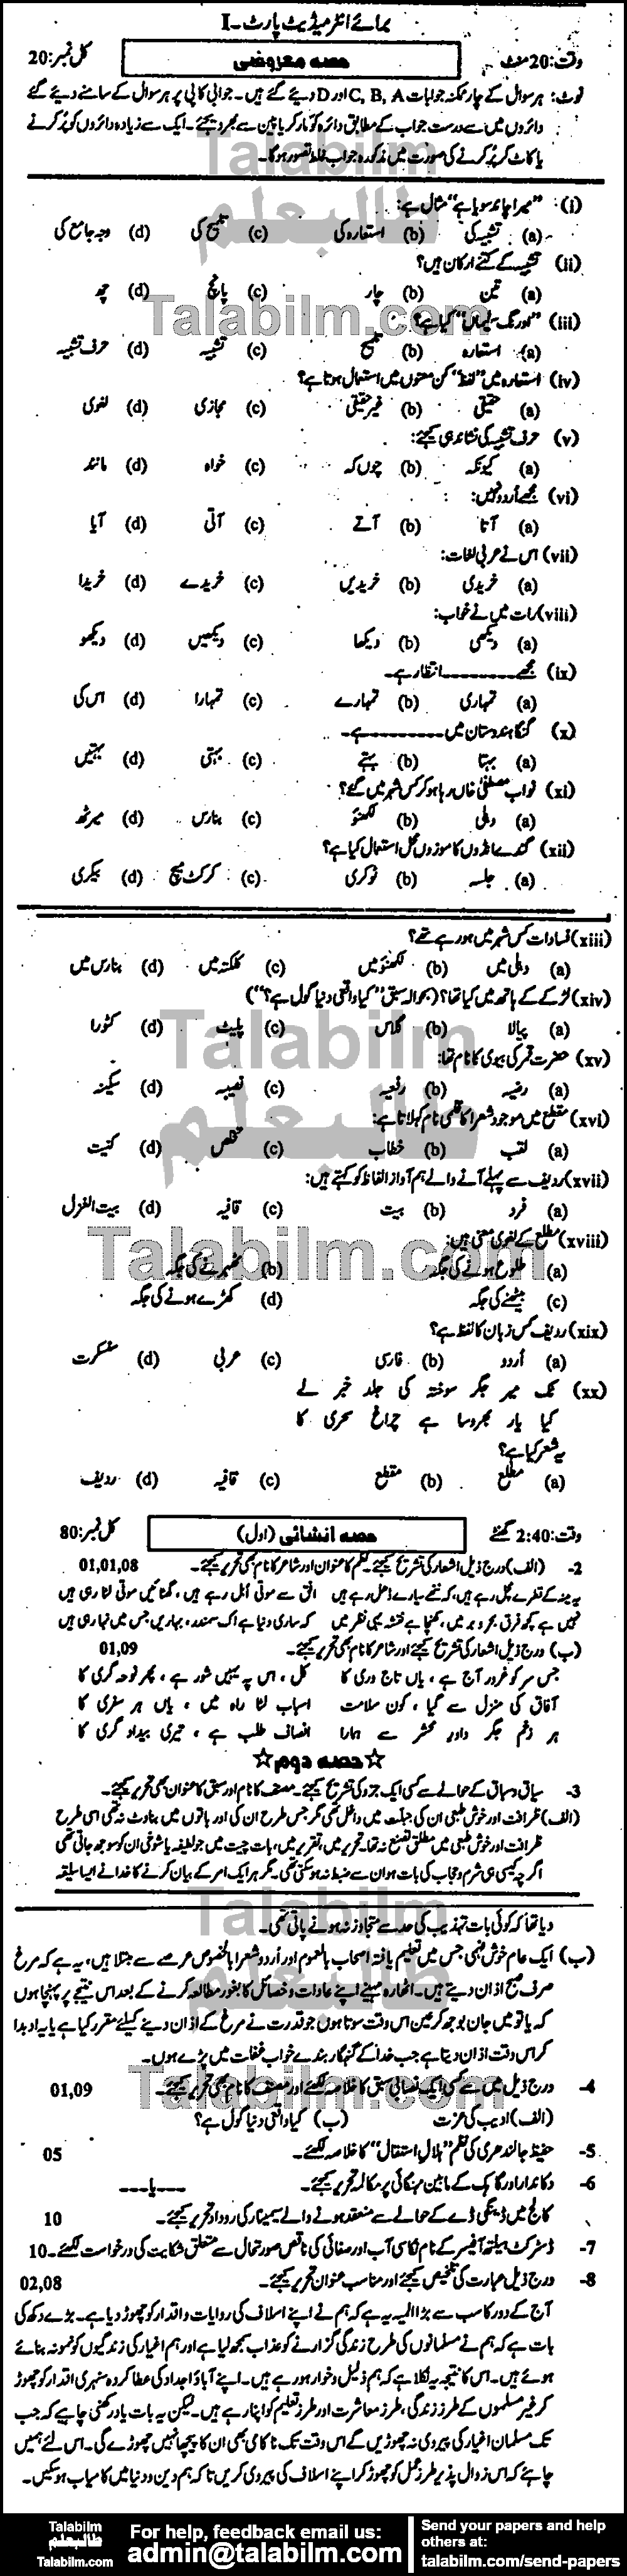 Urdu 0 past paper for Group-II 2016